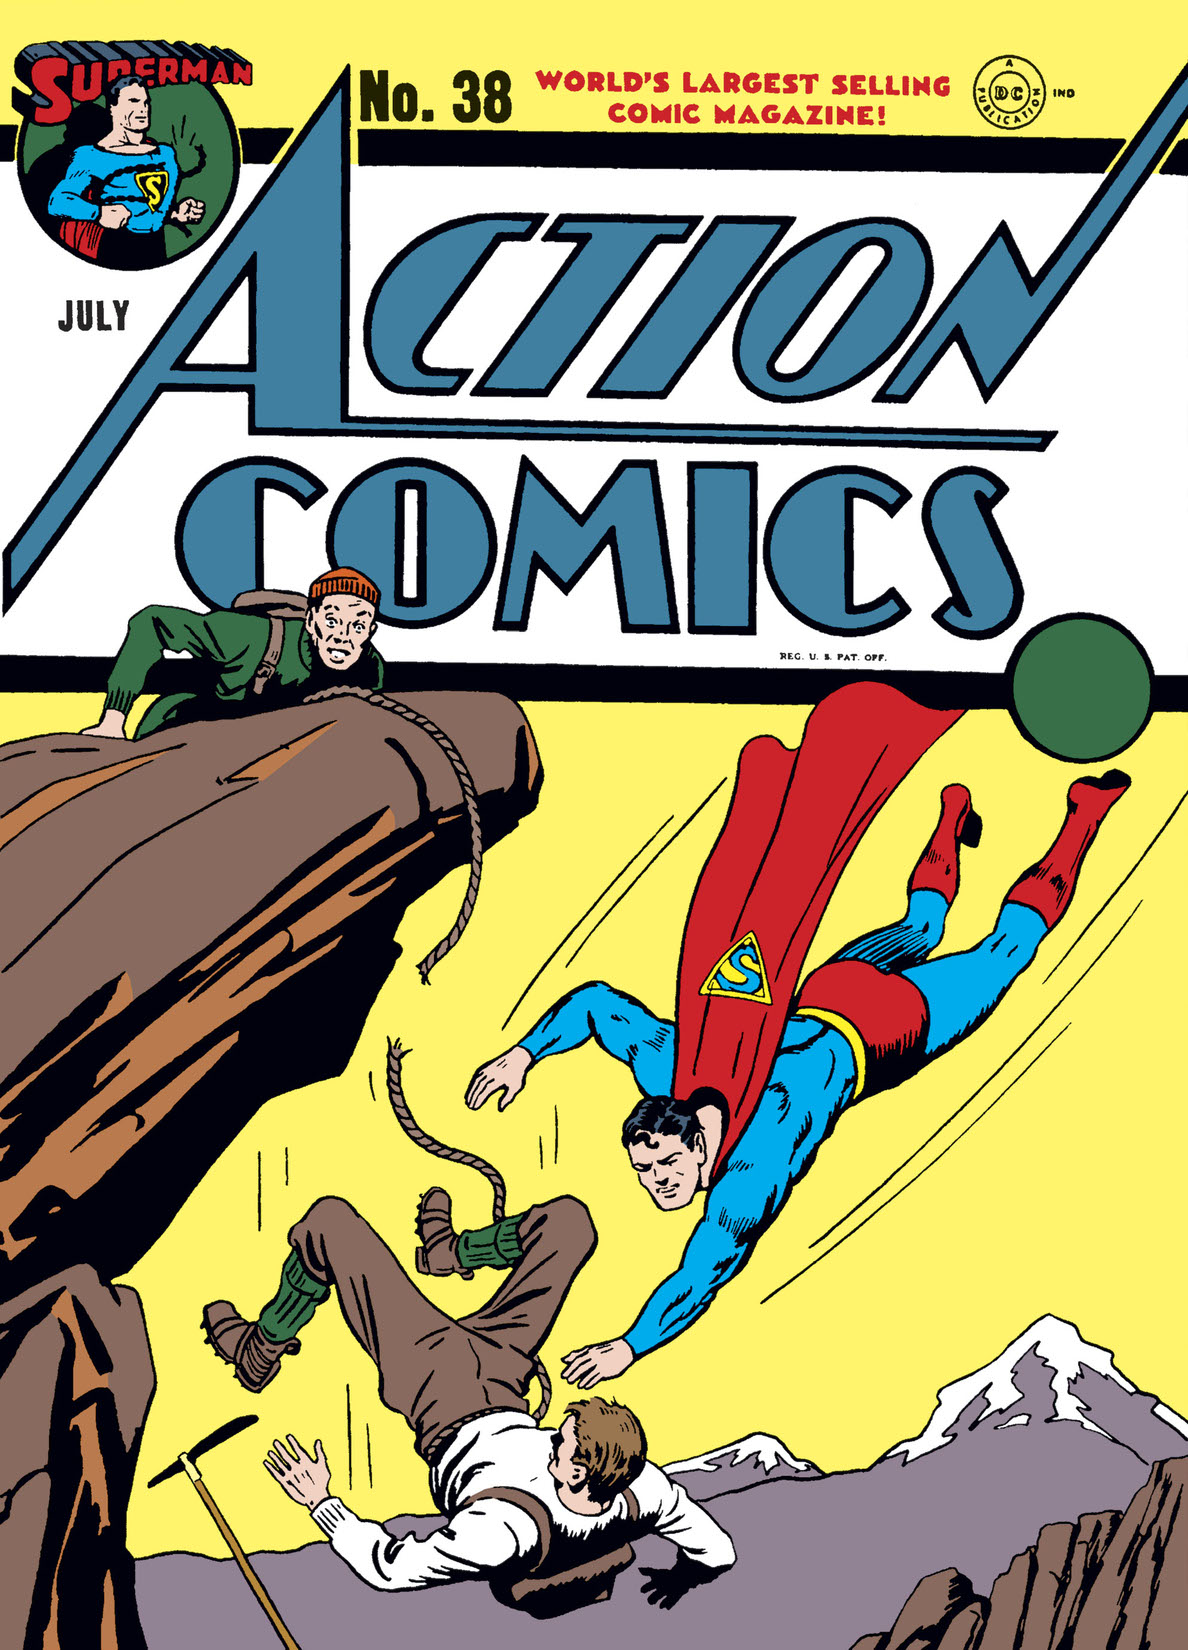 Action Comics (1938-) #38 preview images